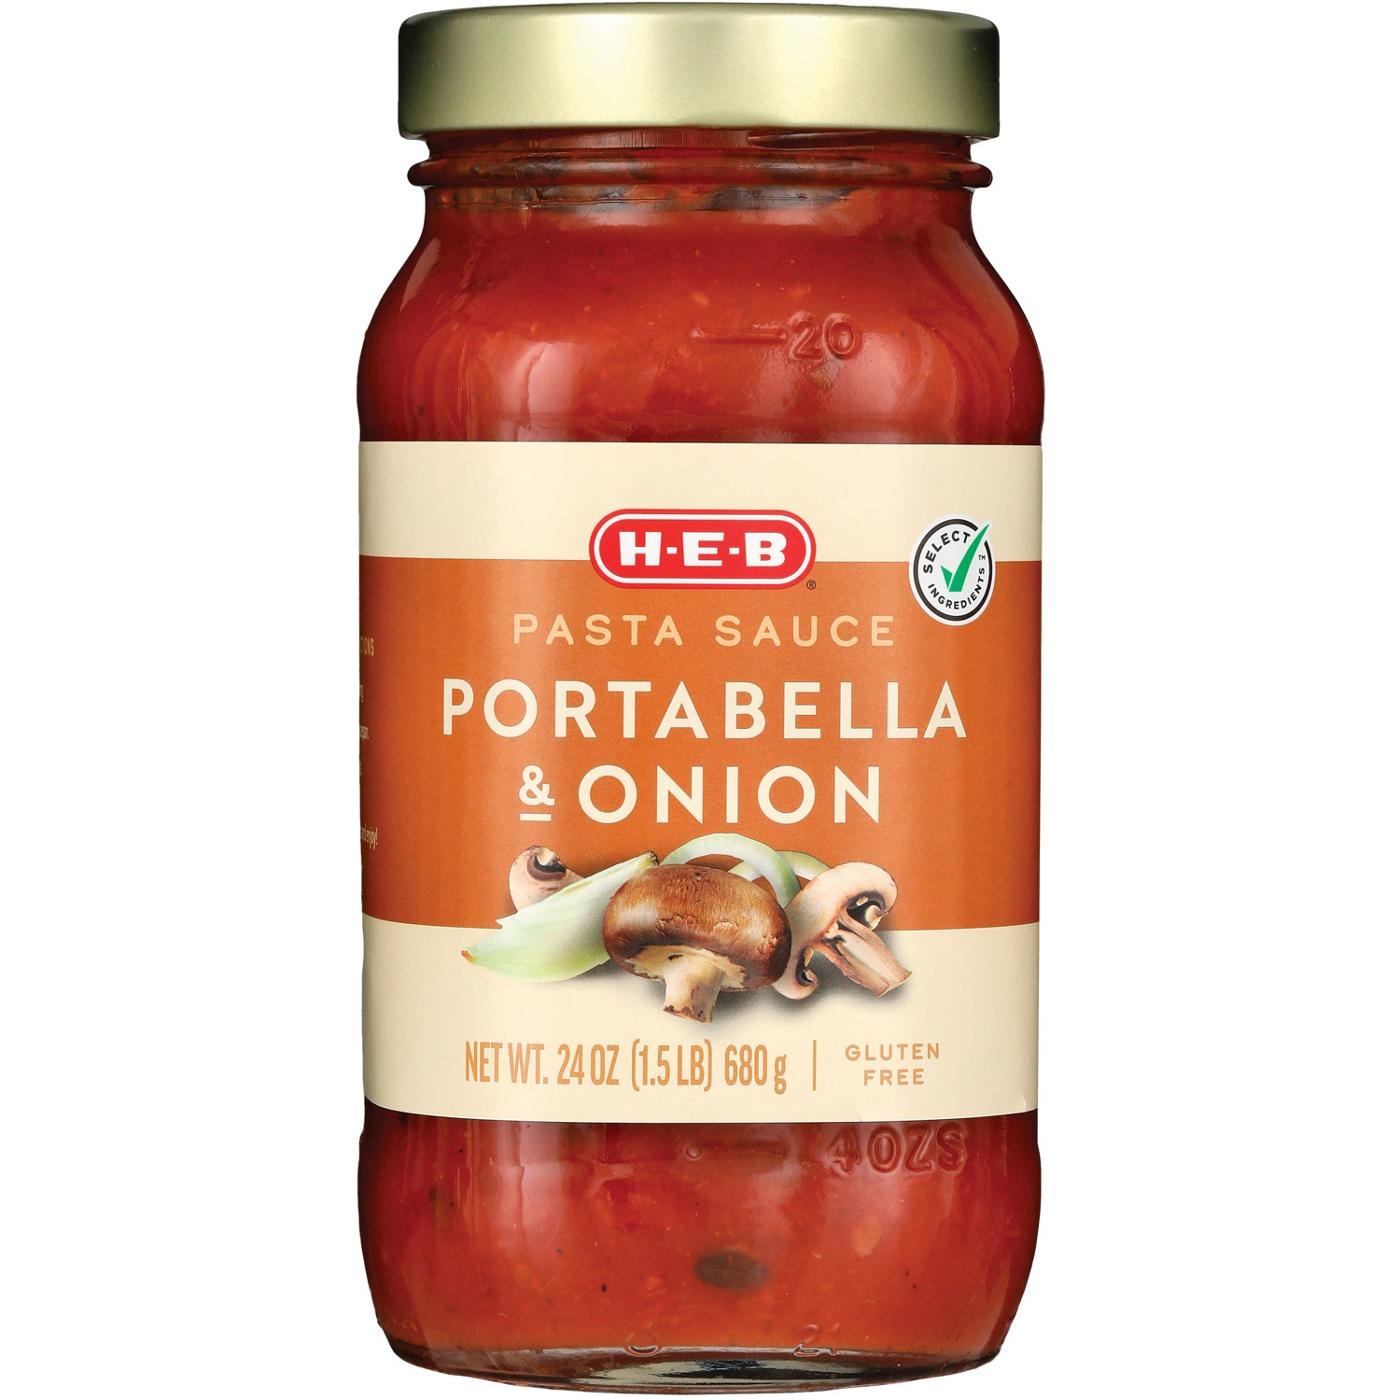 H-E-B Portobello Mushroom & Onion Pasta Sauce; image 1 of 2